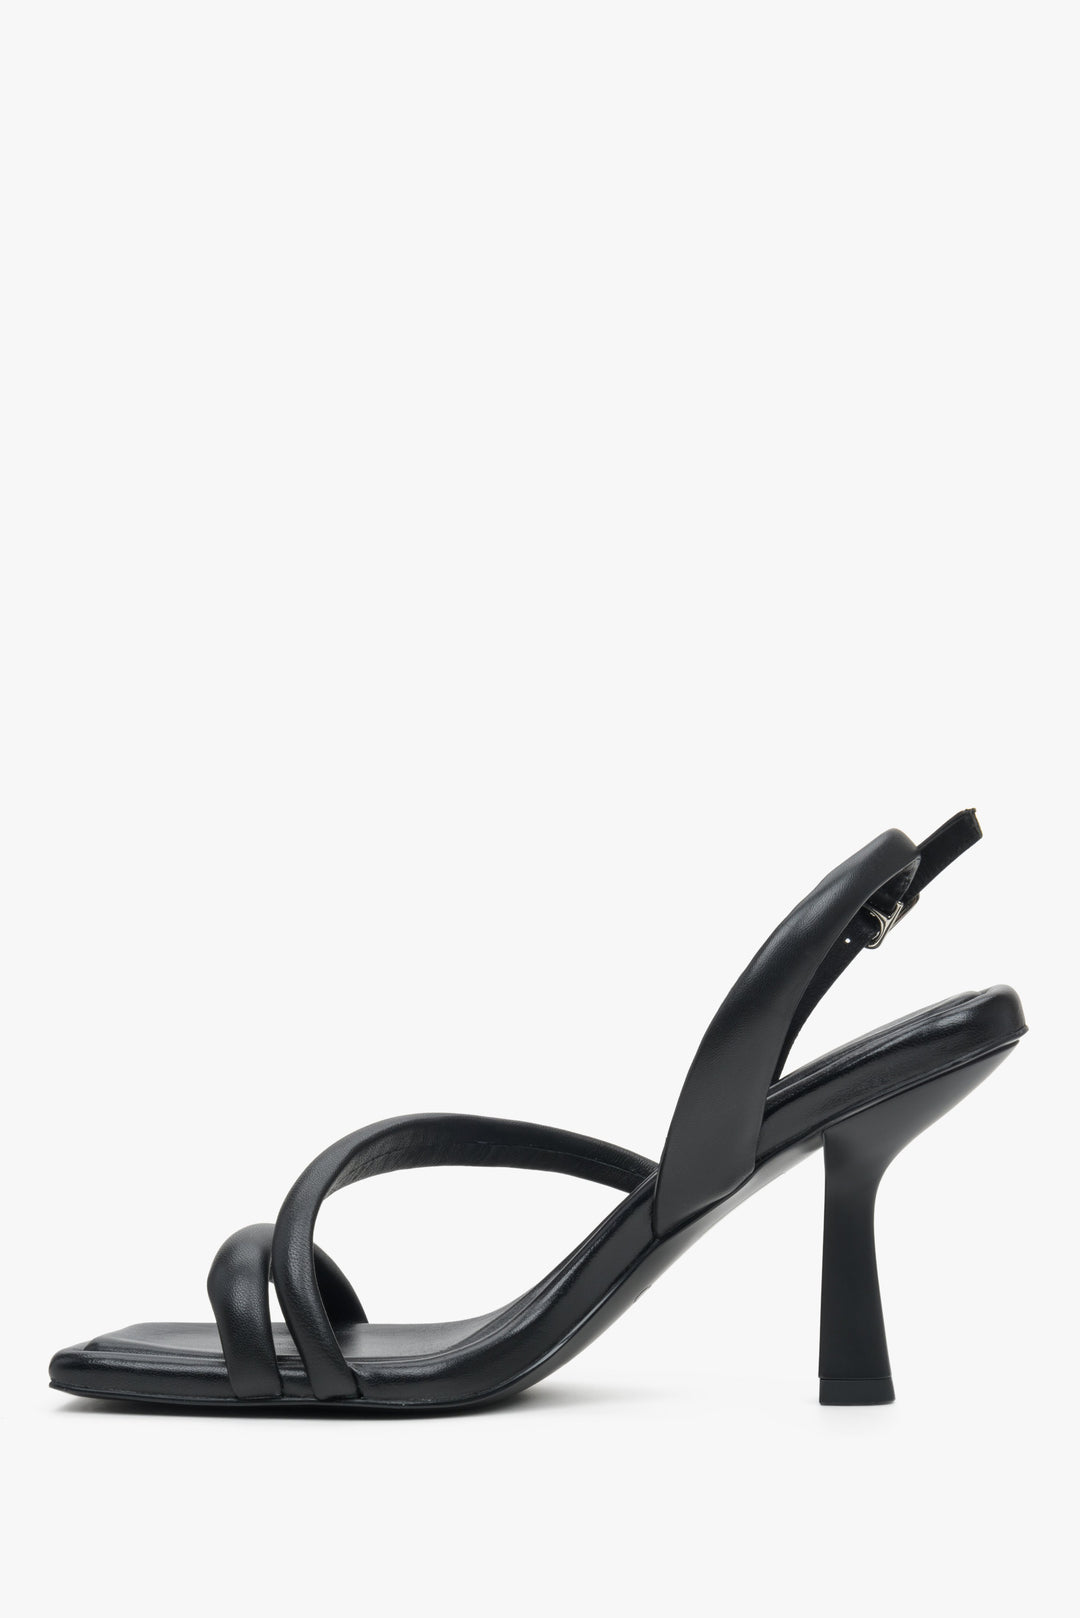 Soft-strap heeled sandals in black colour - shoe profile.